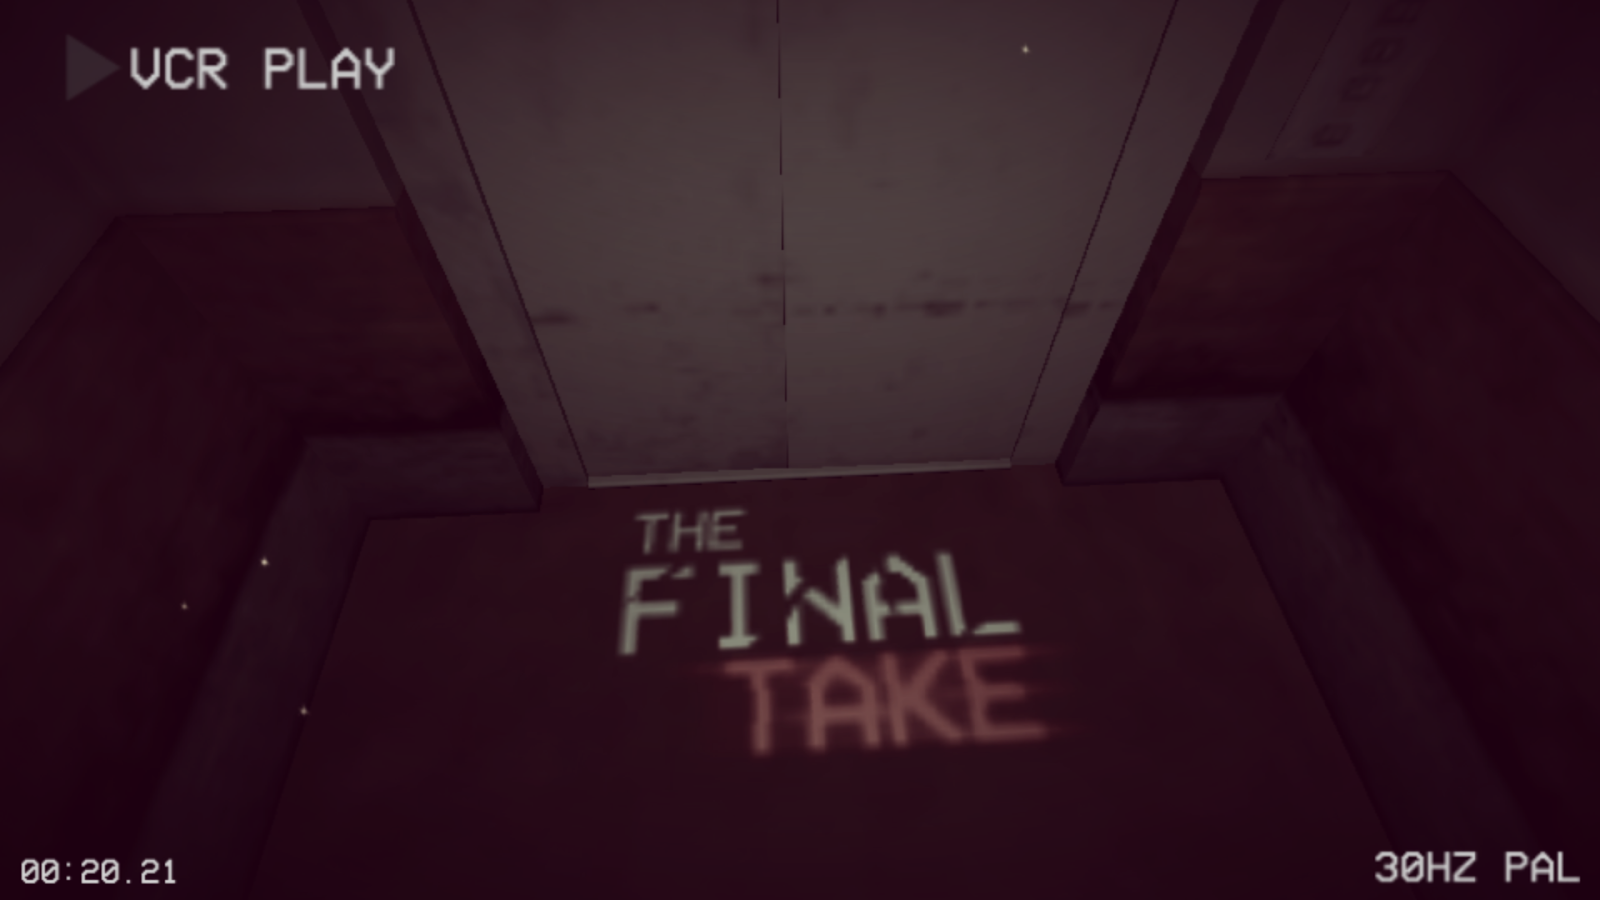    The Final Take- screenshot  